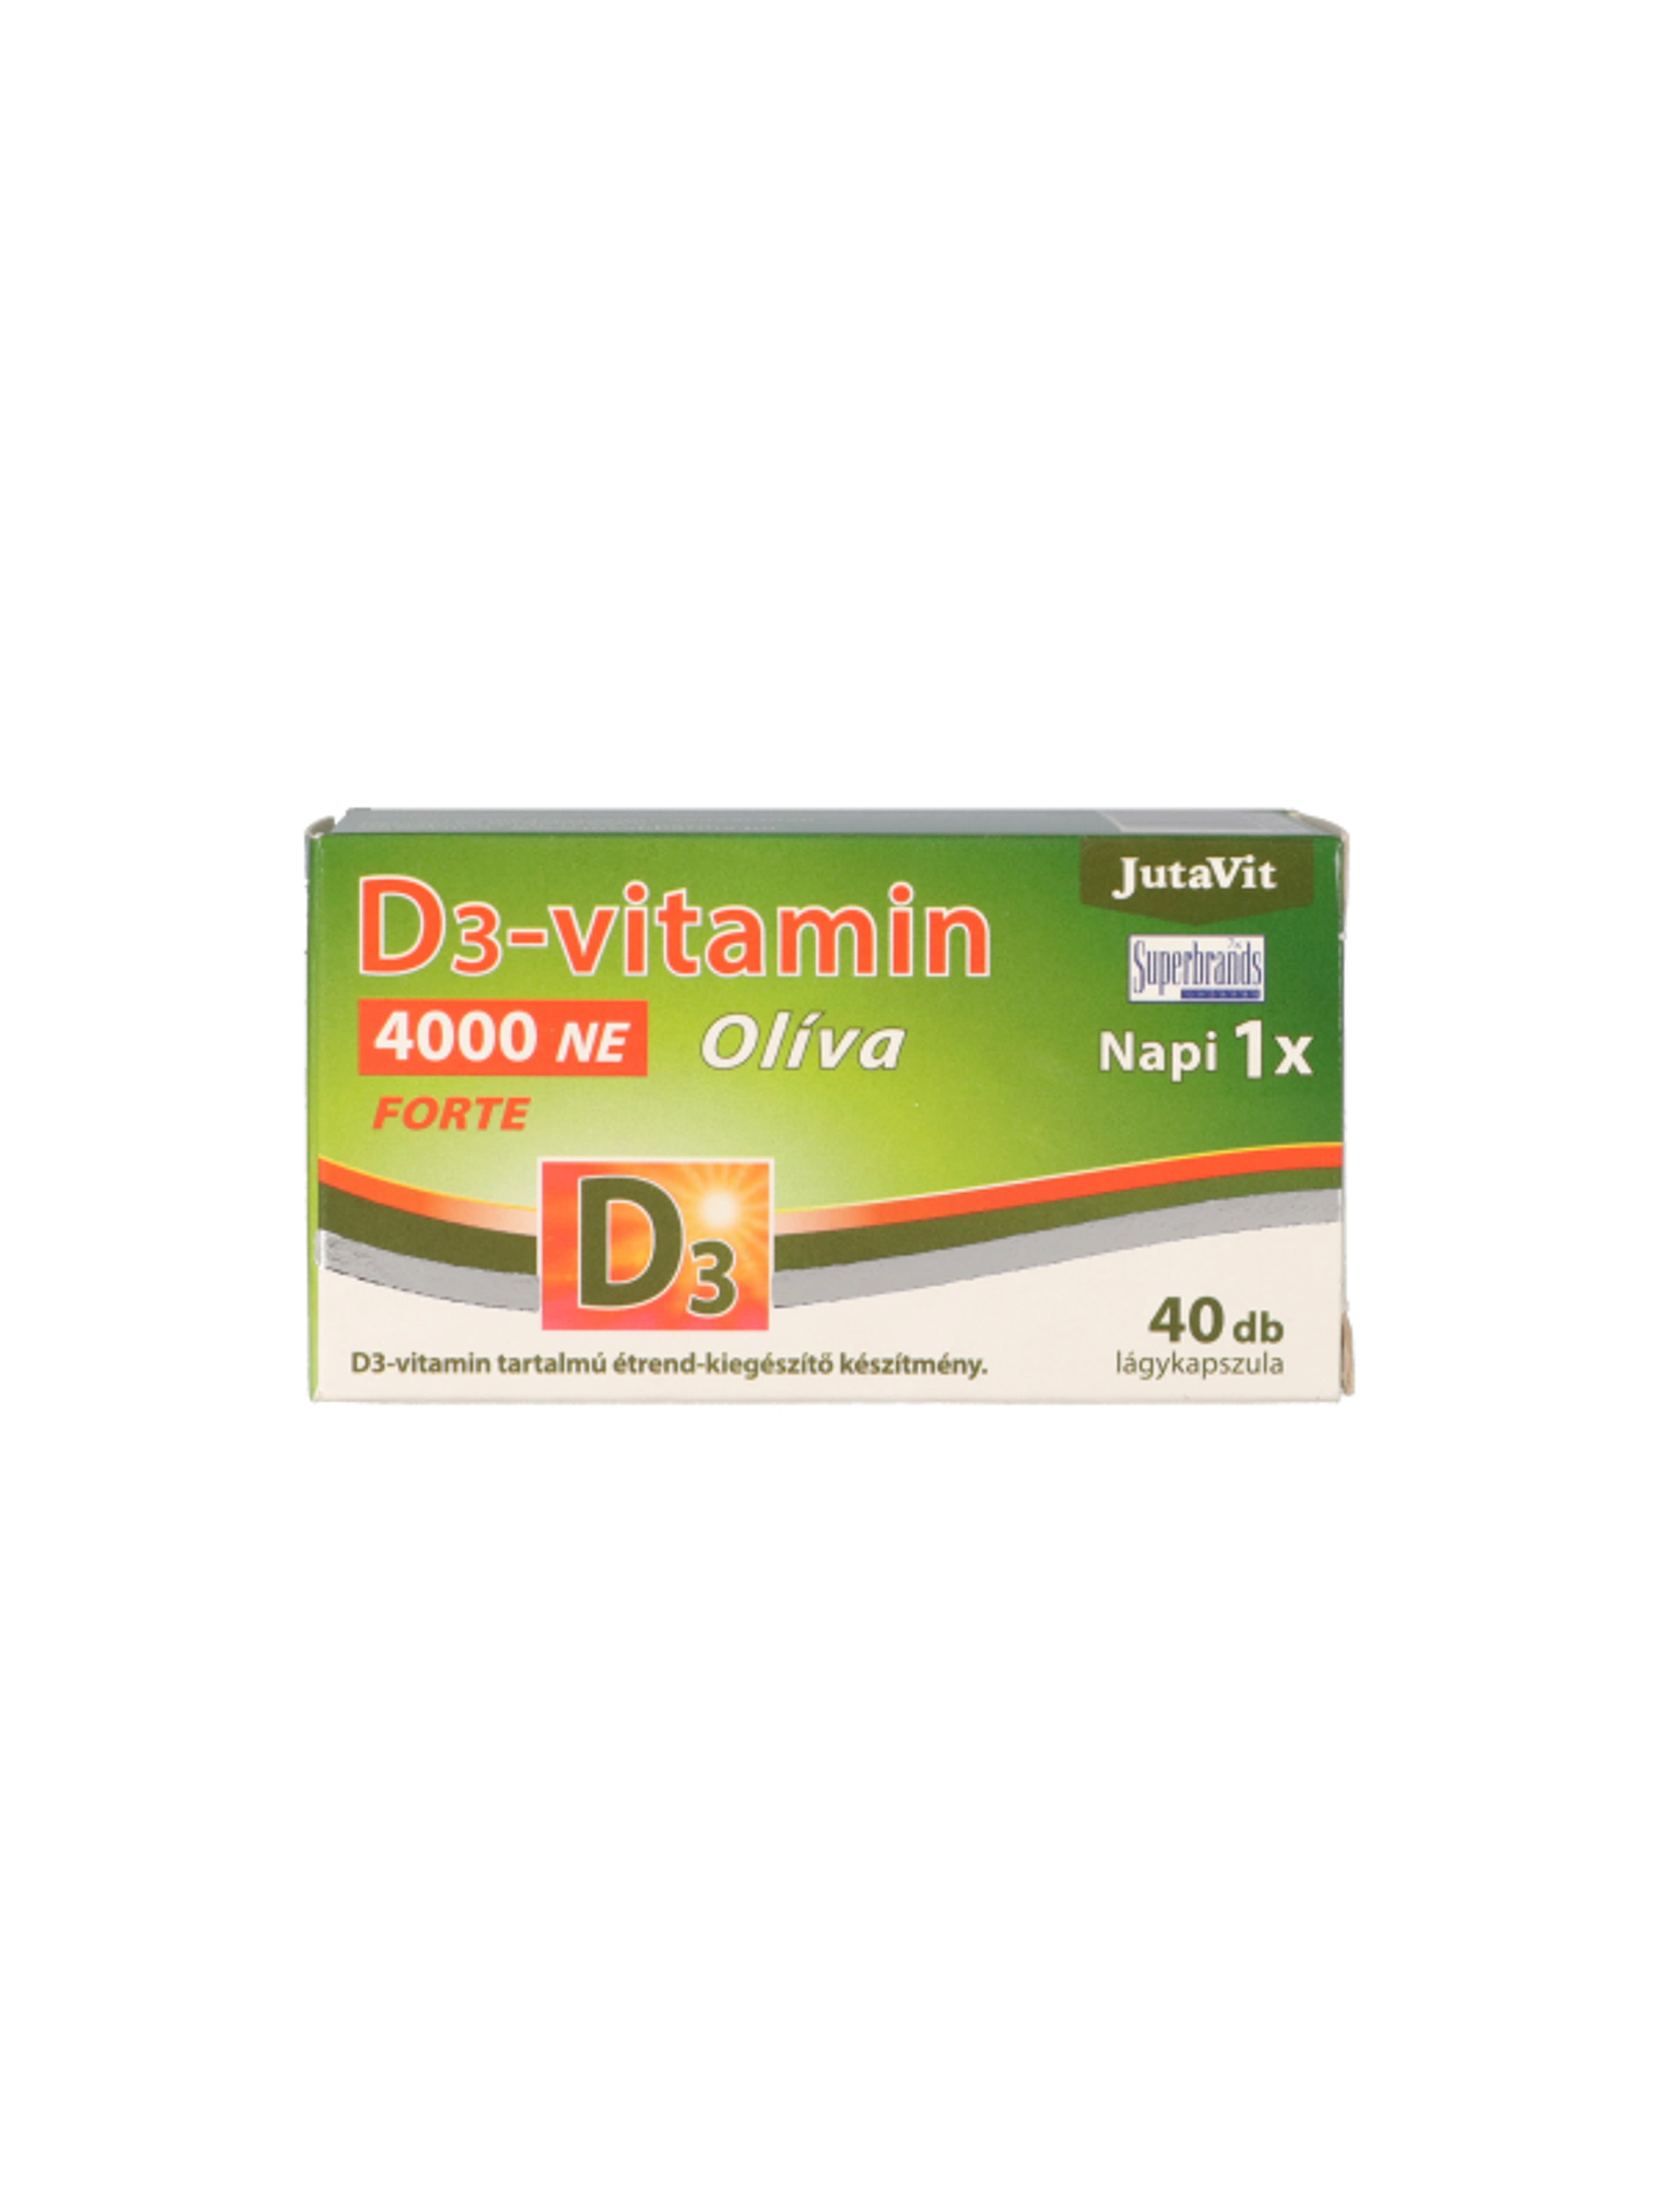 JutaVit D3-vitamin 4000NE Oliva Forte lágykapszula - 40 db